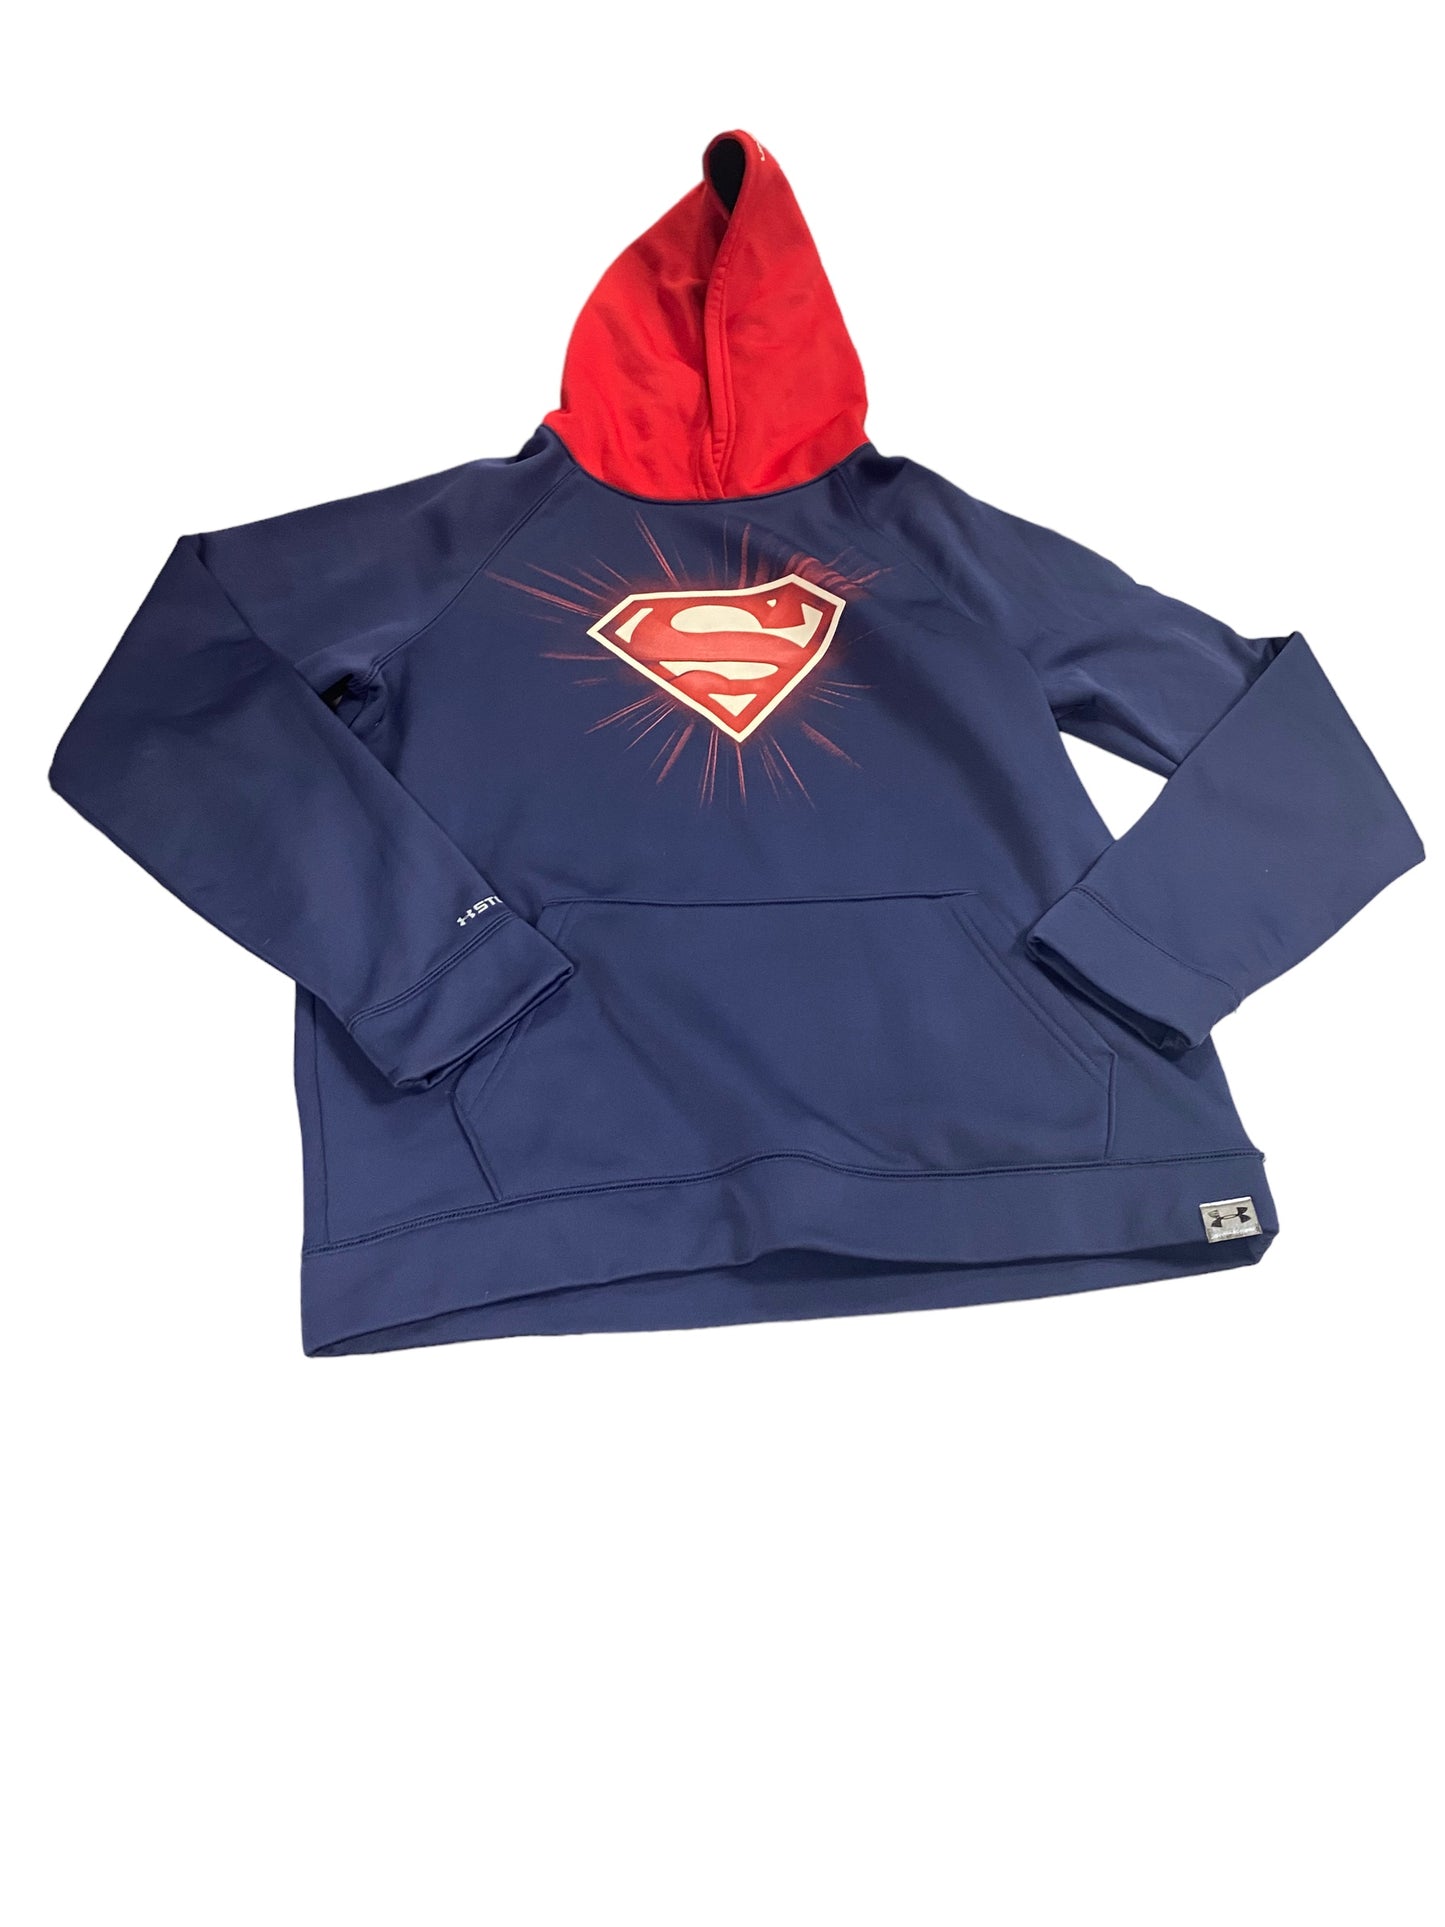 super hero sweater size:14/16